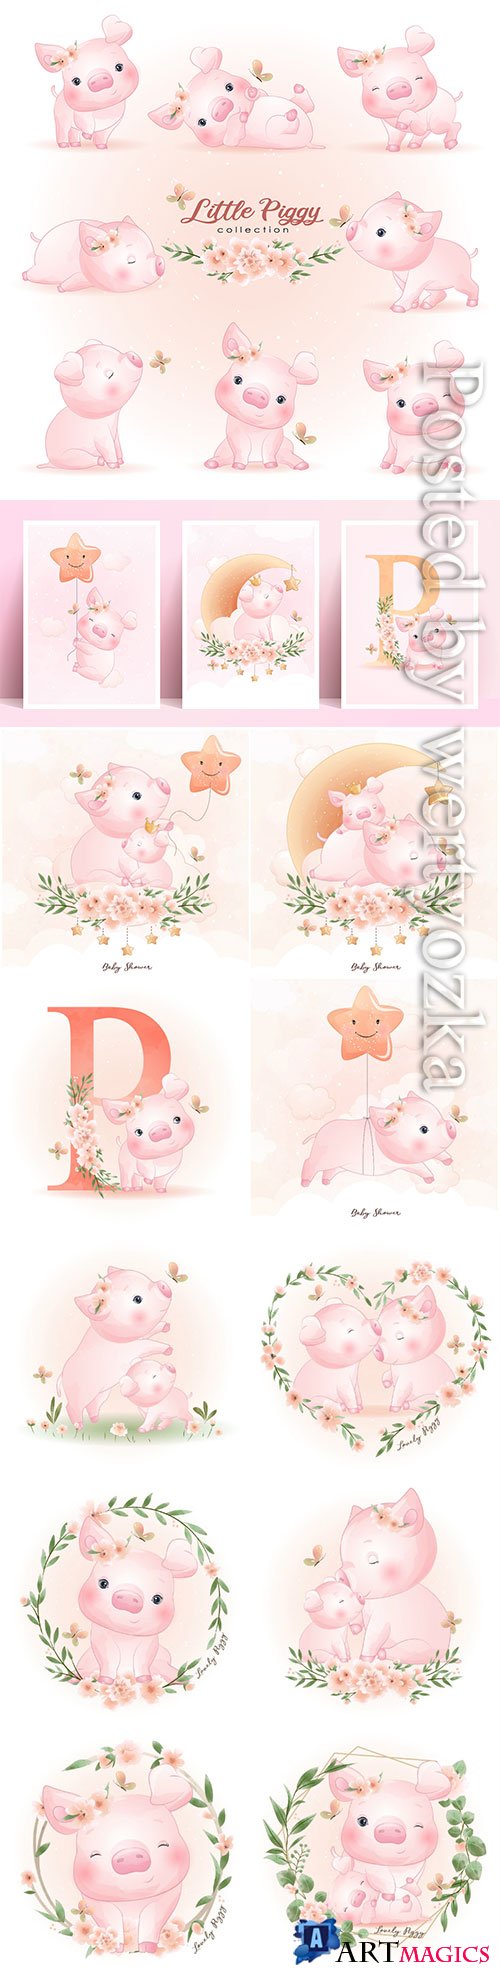 Cute doodle piggy poses with floral illustration premium vector